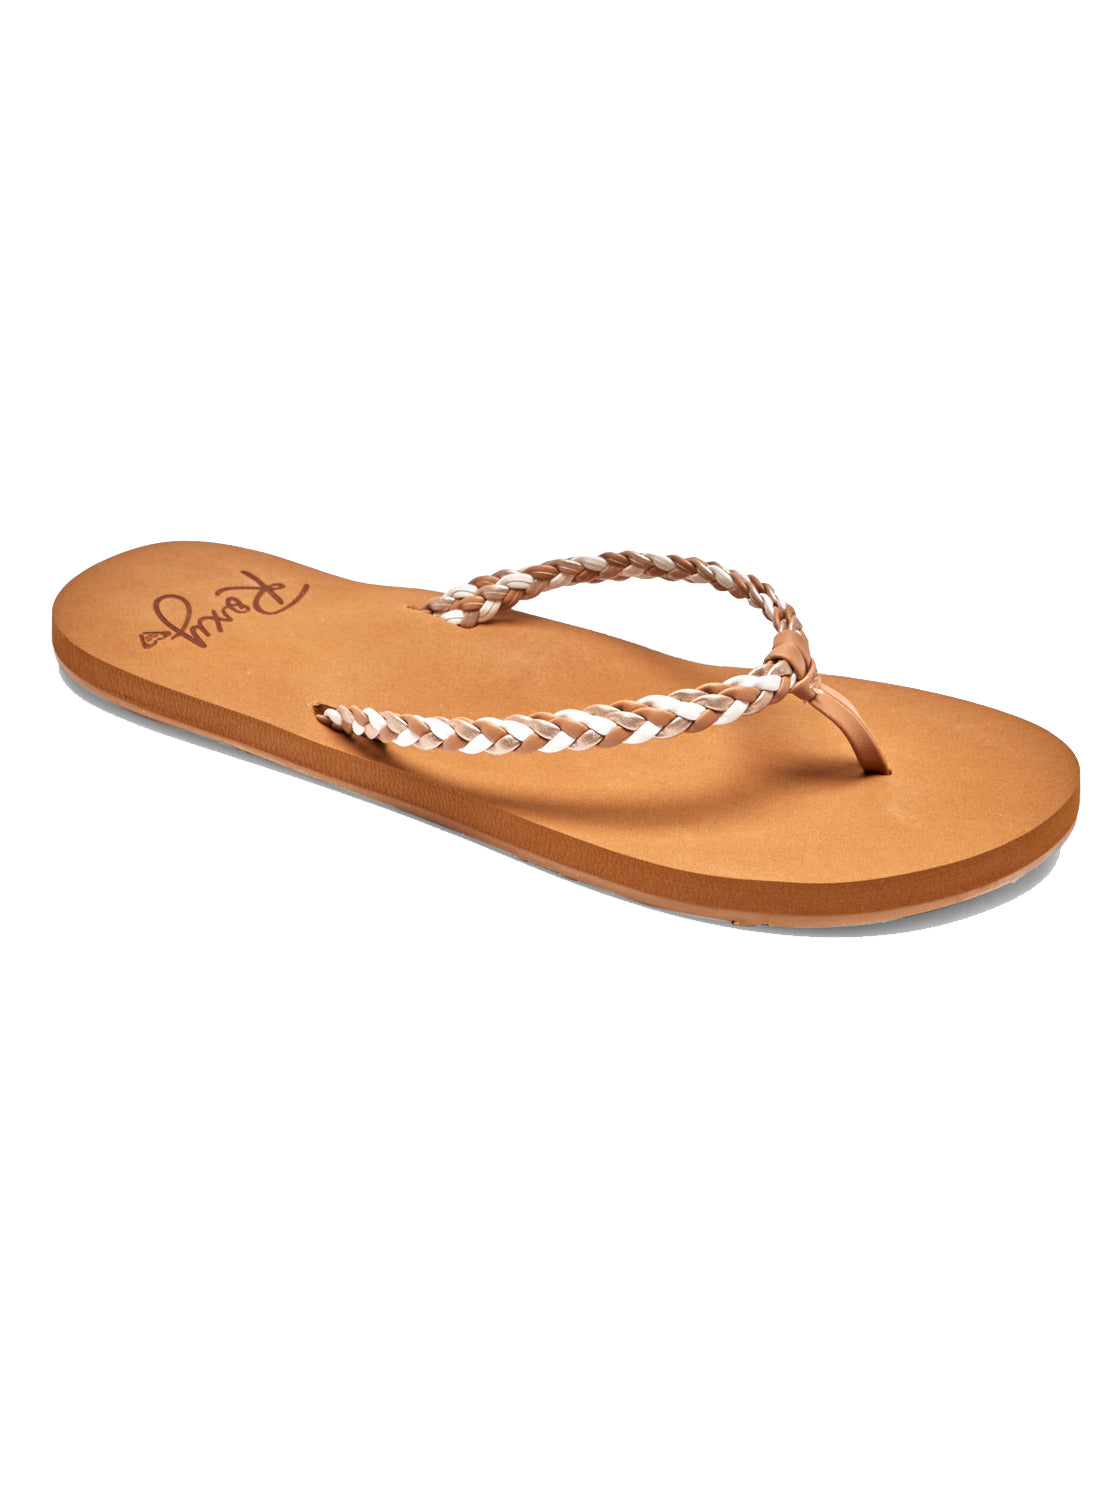 Roxy Costas Womens Sandal TG1-Tan-Gold 7